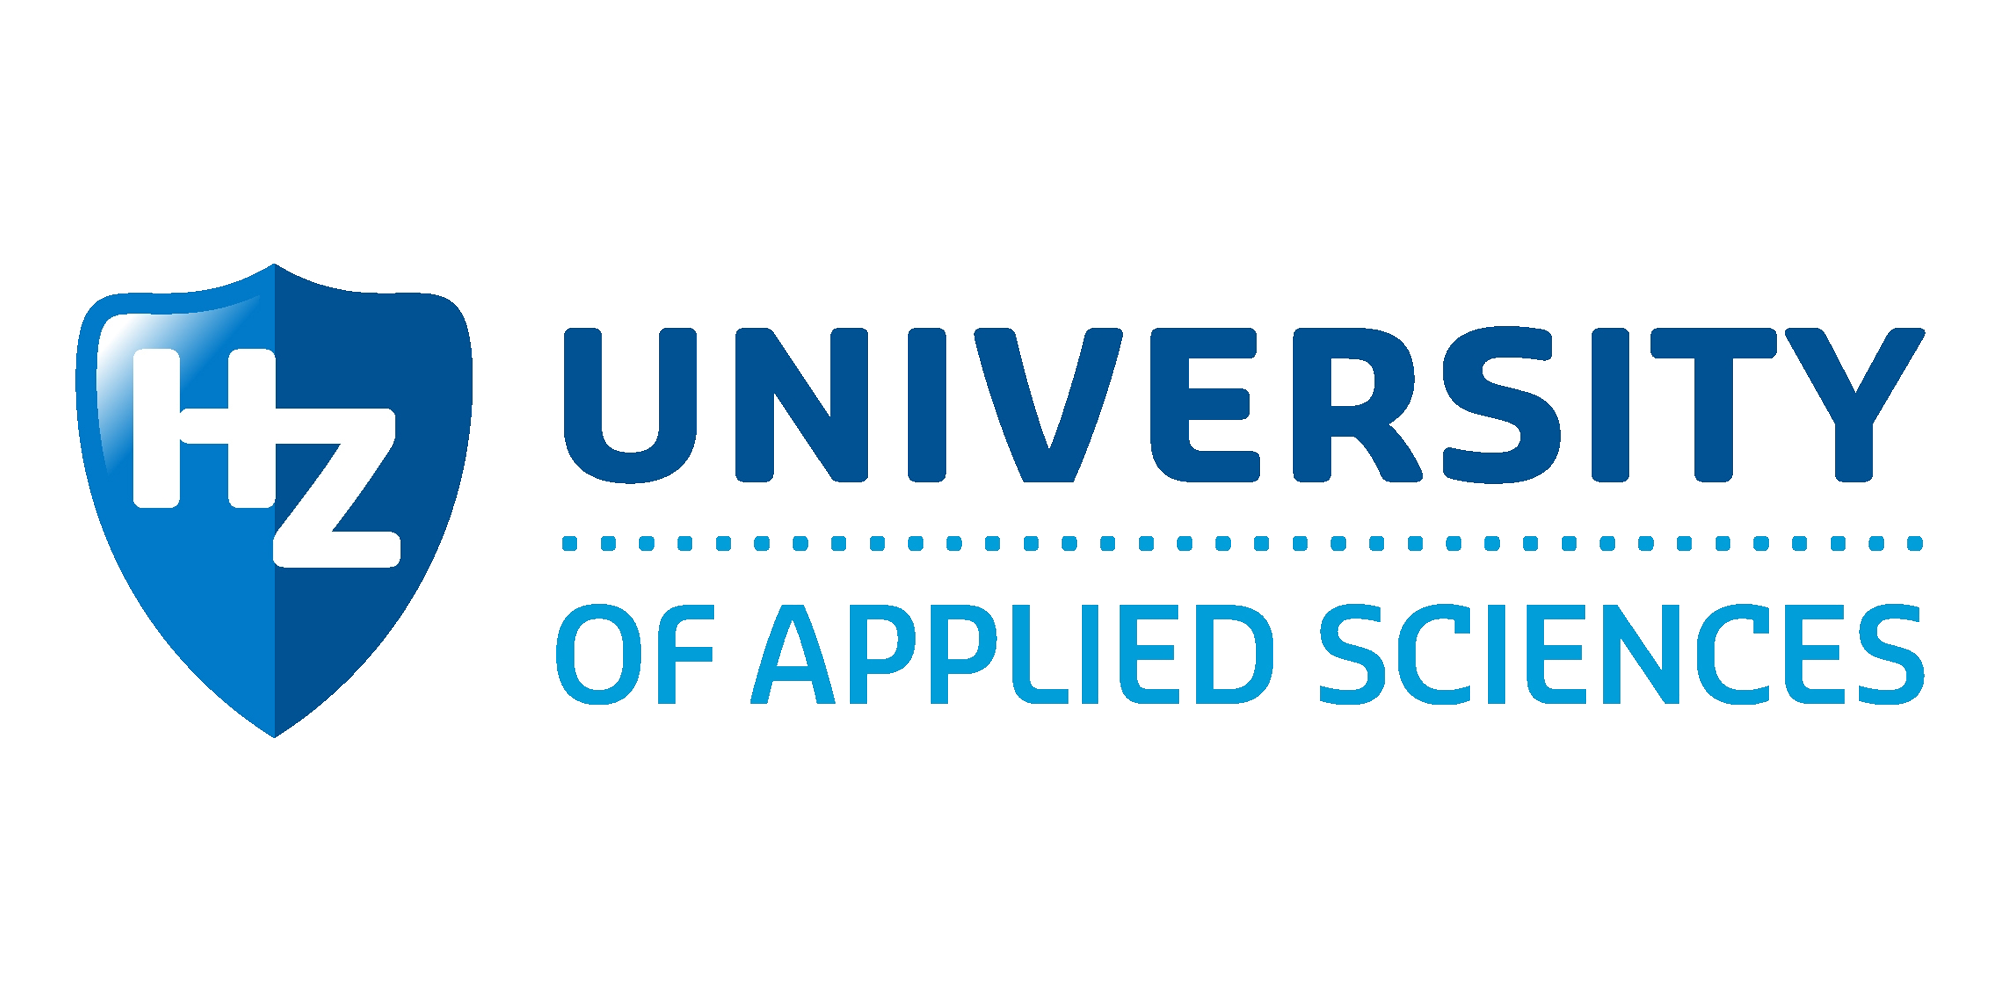 HZ University of Applied Sciences EldersVR